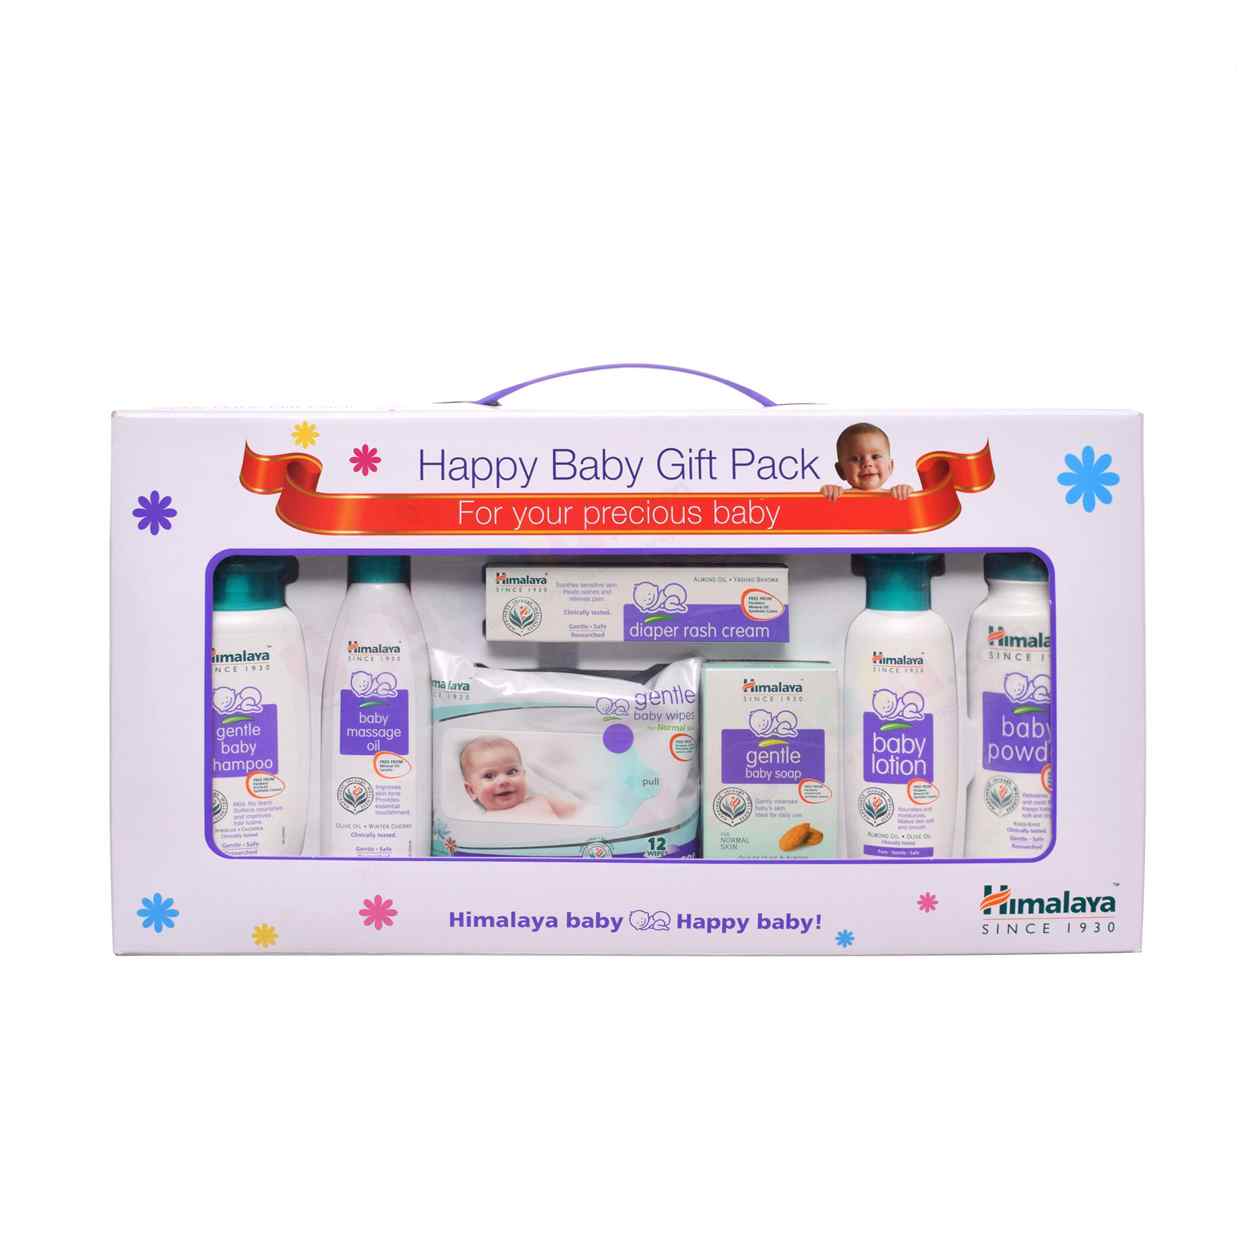 HIMALAYA Happy baby gift pack - set of 7